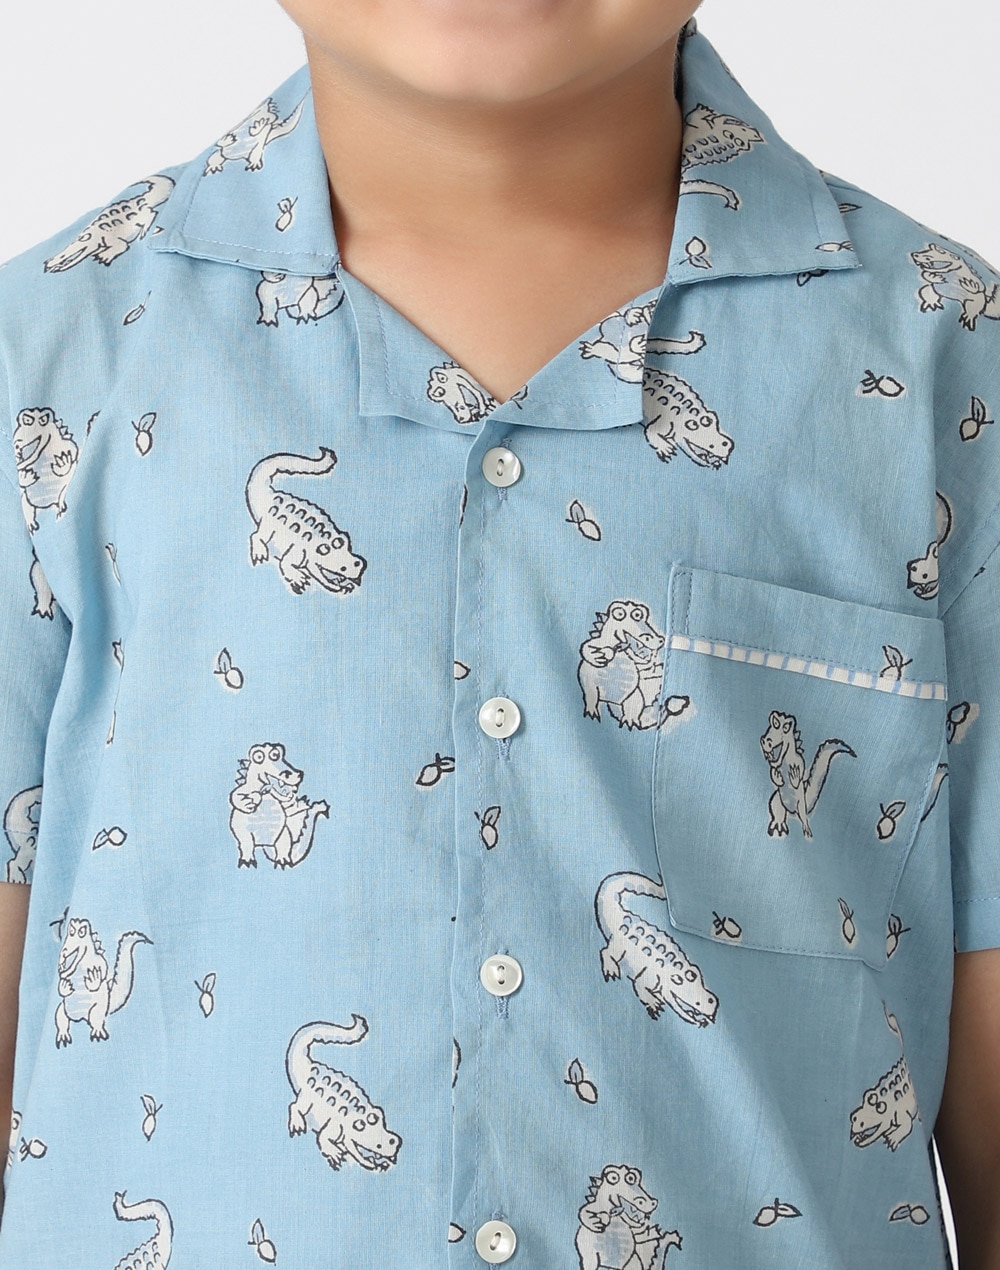 Kids Cotton Printed Pyjama Set